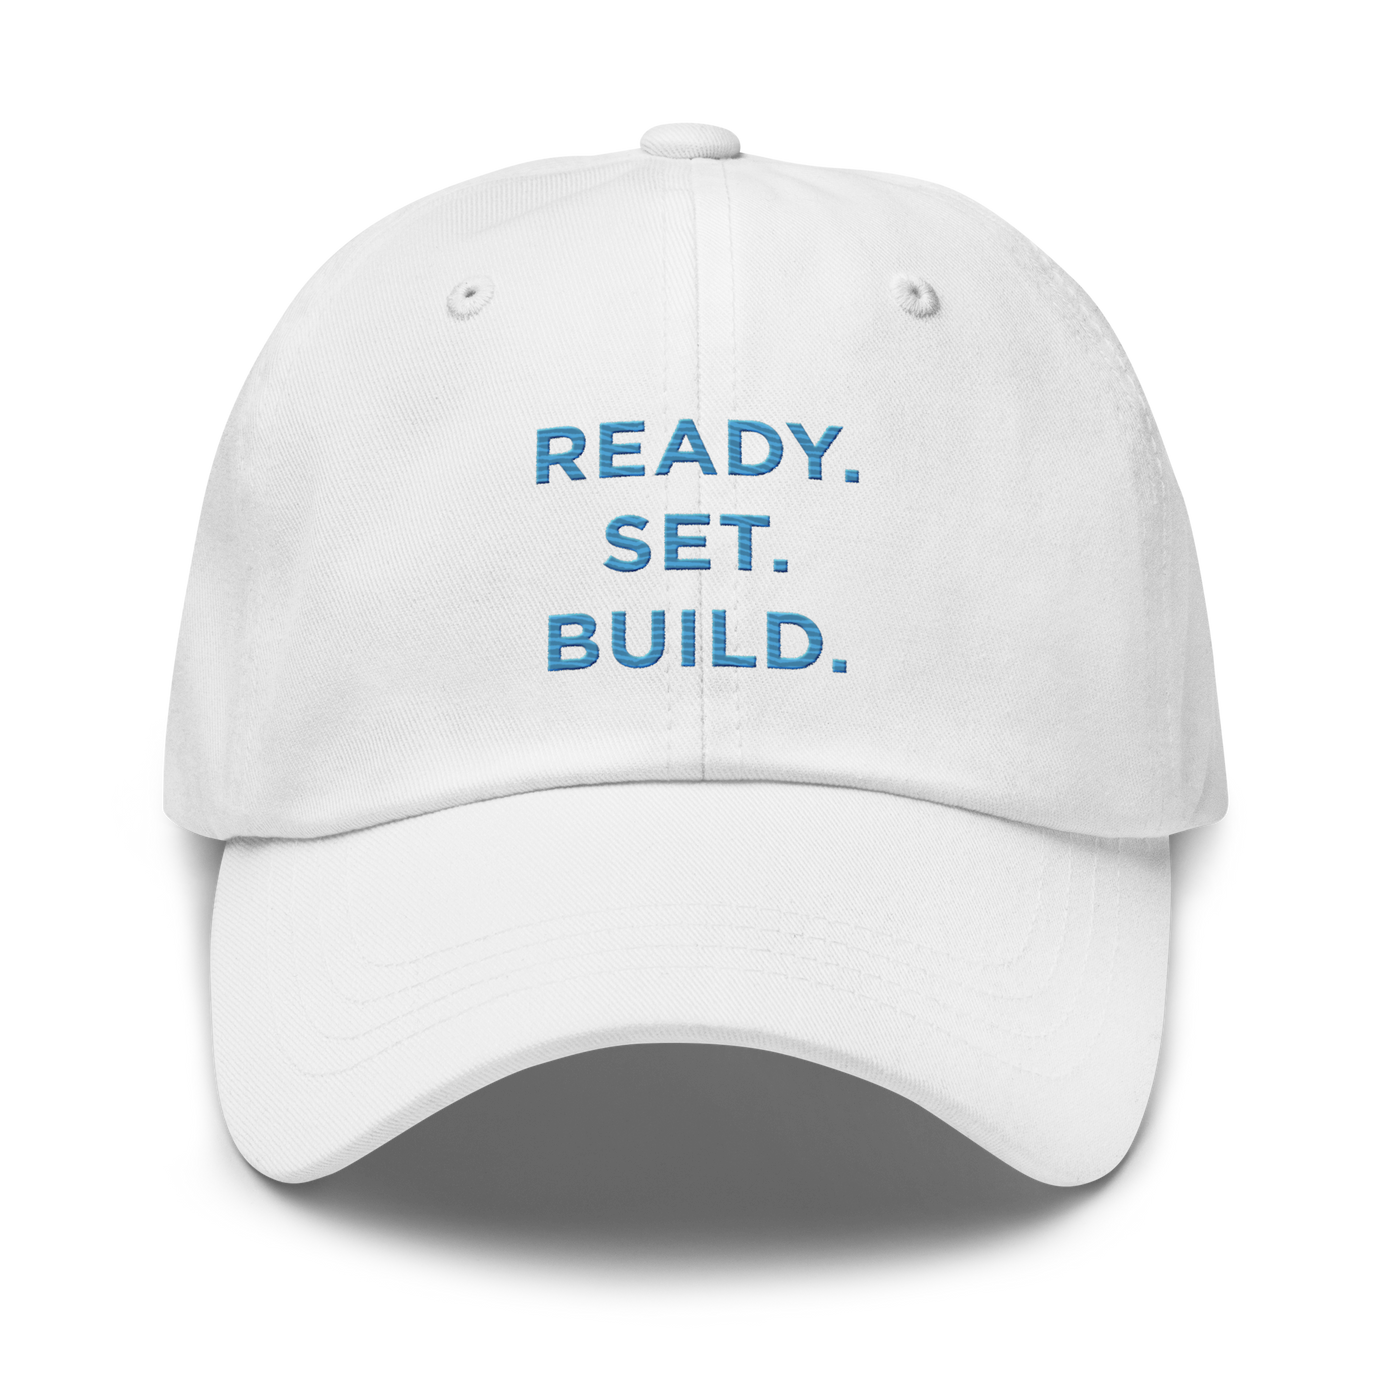 Ready. Set. Build. Hat